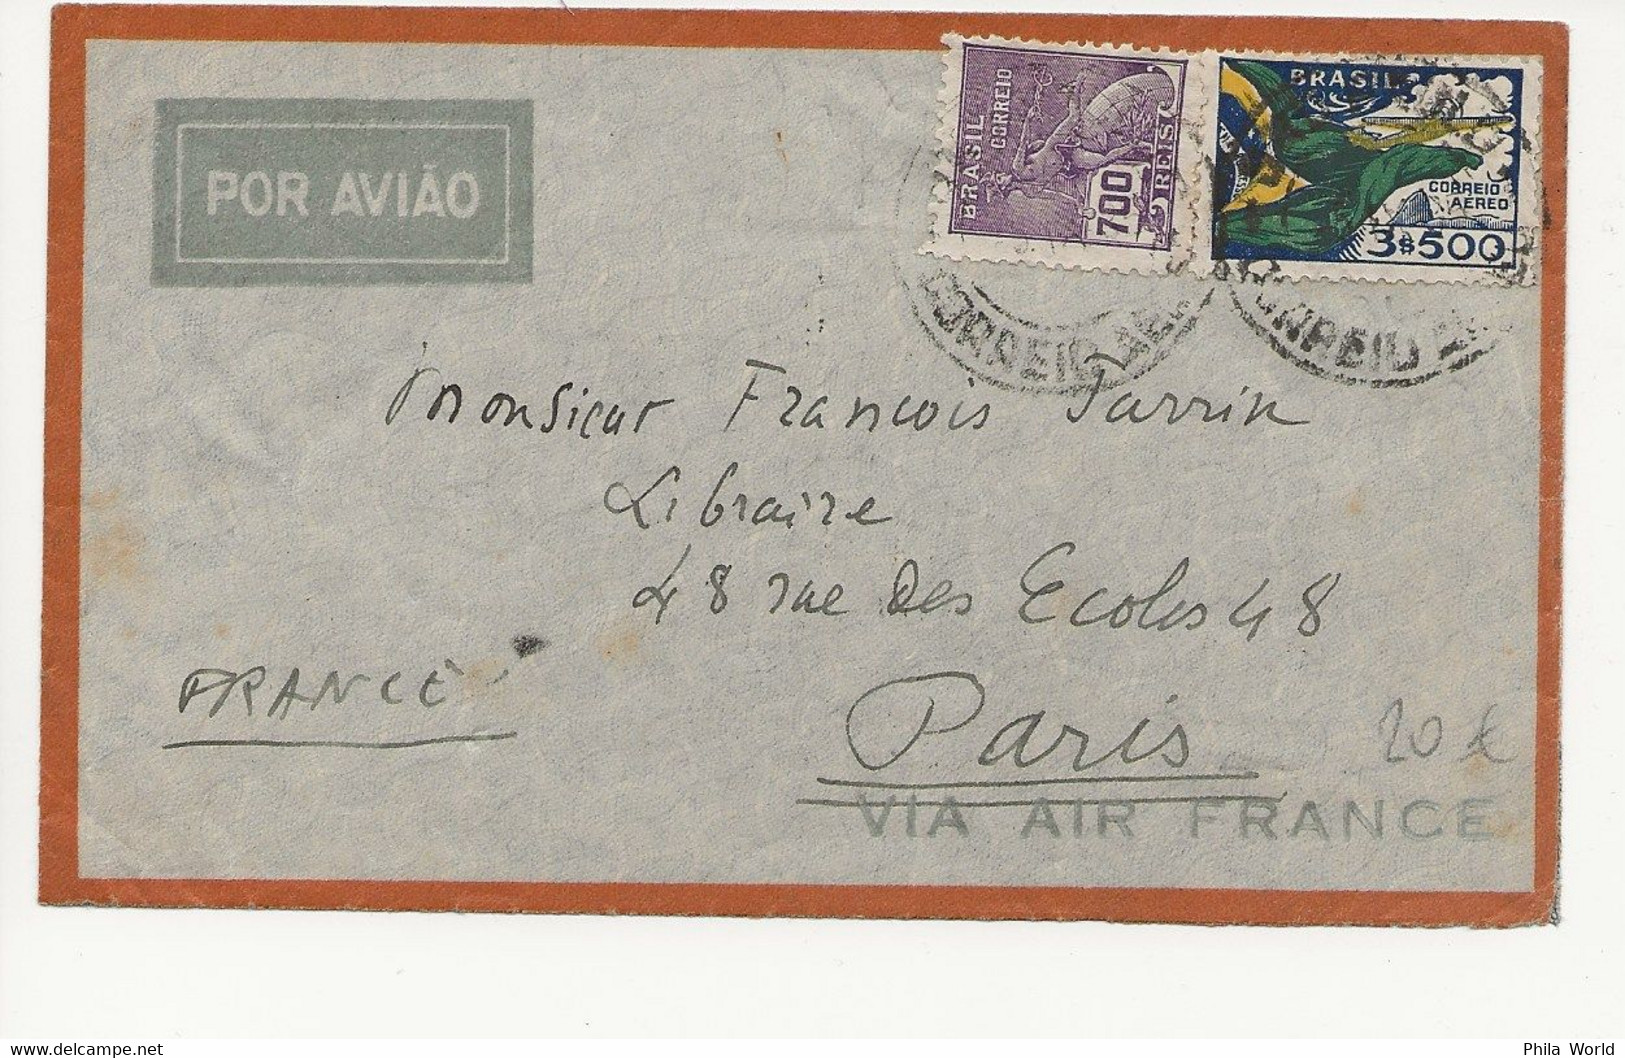 AIR FRANCE 1935 AEROPHILATELIE LIGNE MERMOZ BRESIL Sao Paulo ARRIVEE PARIS RP AVION 08 SEPT 1935 - Avions